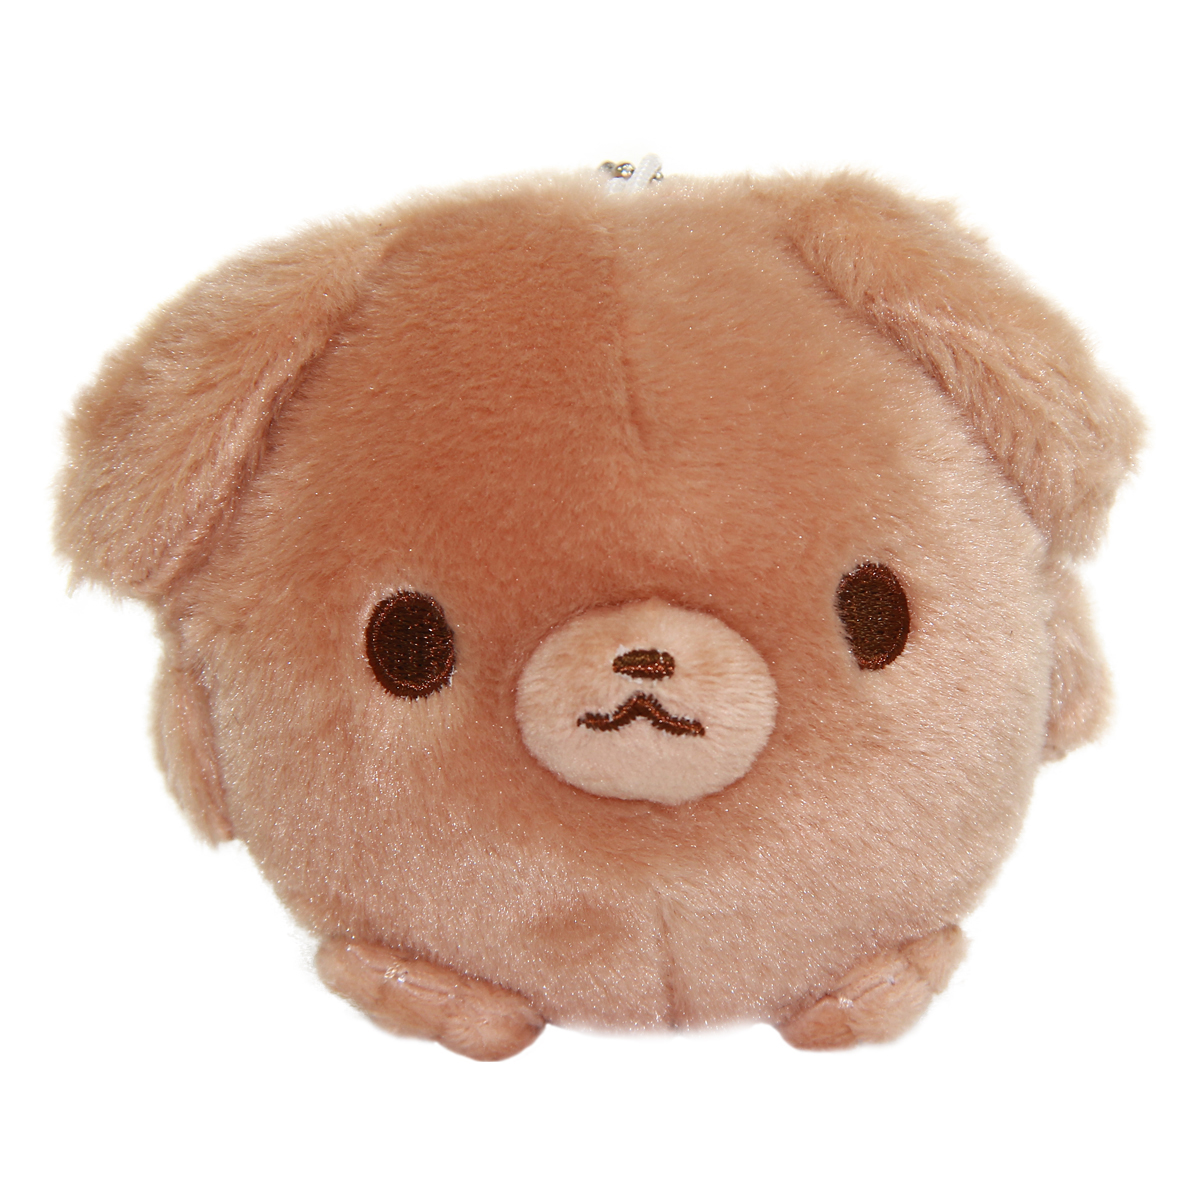 Puppy Plush Doll Kawaii Stuffed Animal Soft Fuzzy Squishy Plushie Mochi Brown